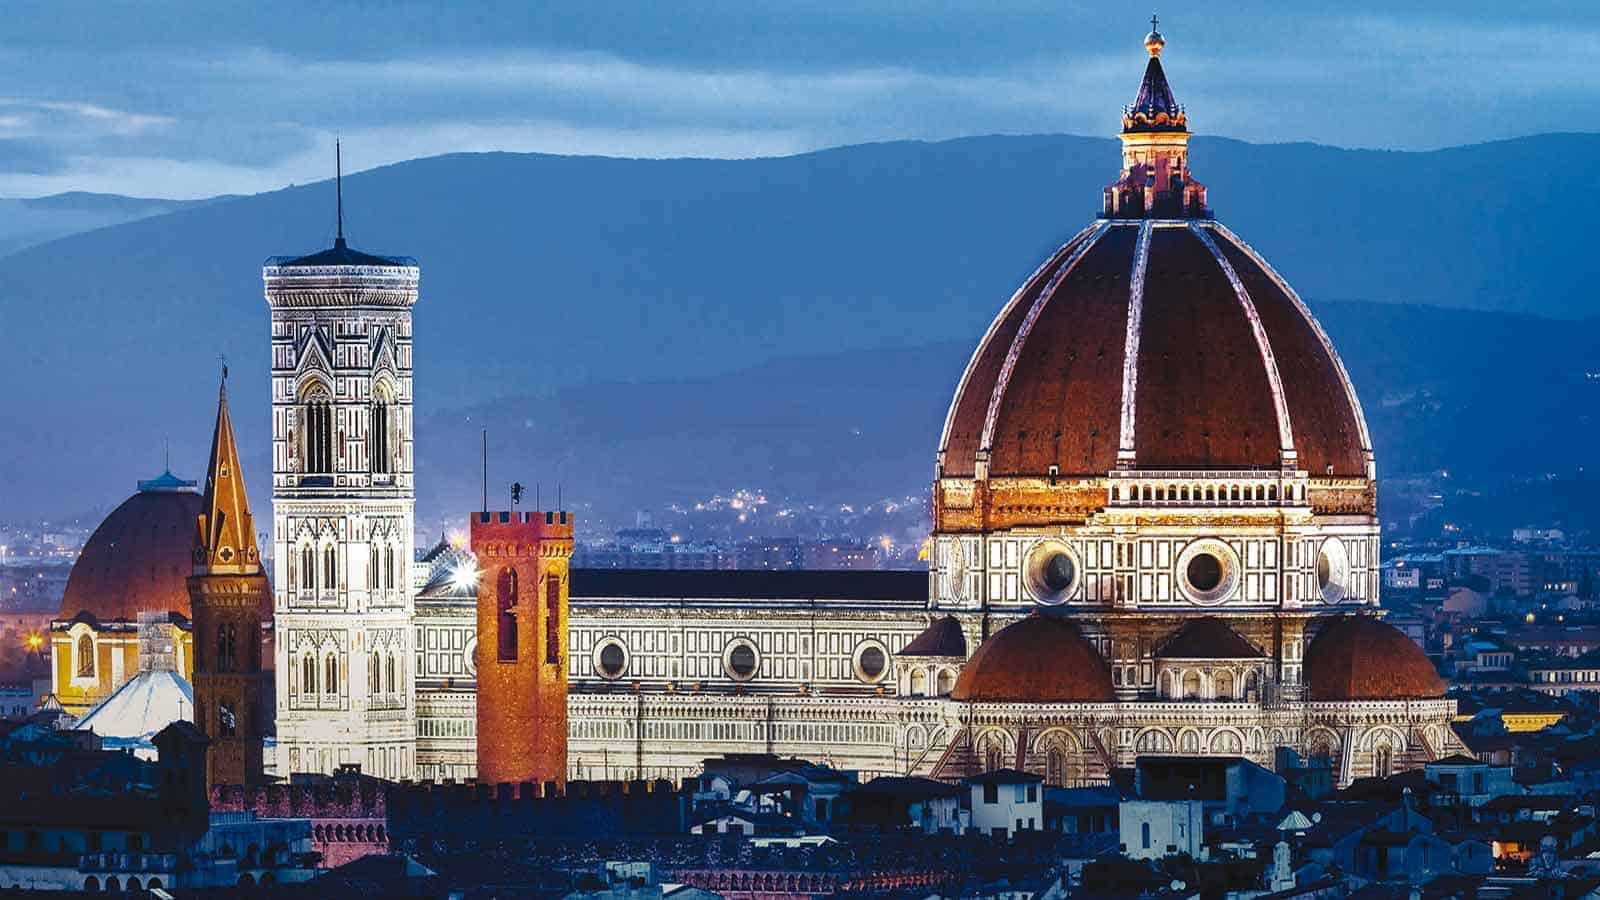 Firenze Italy, intro